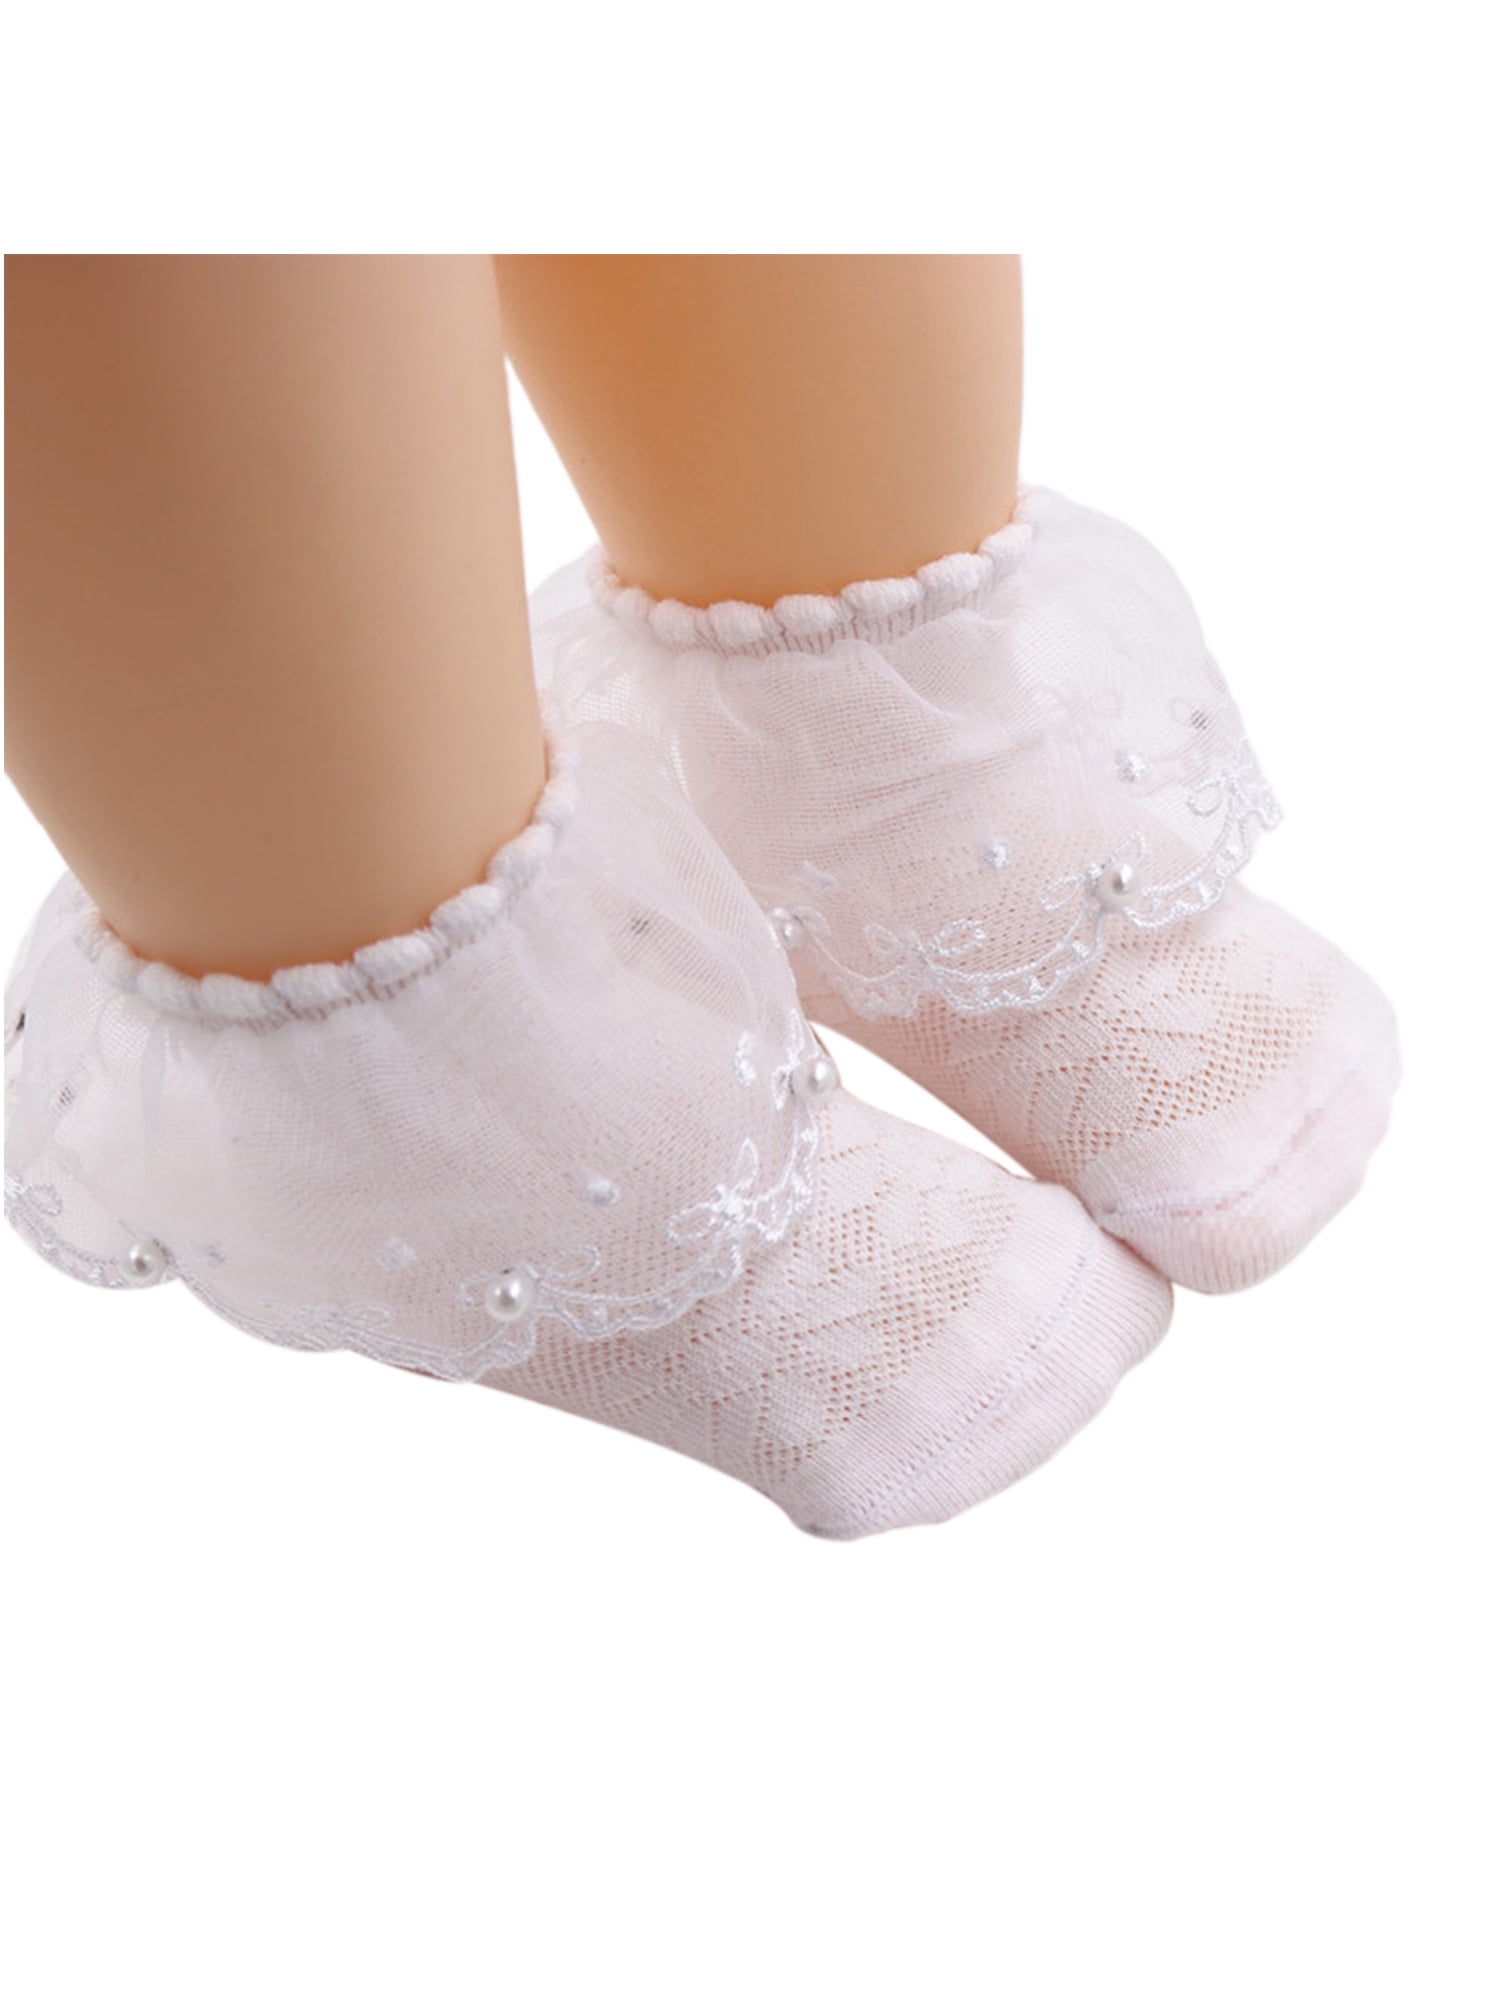 2 pairs Baby girls Socks baby Lace Ruffle socks frilly socks Flowers bowknot socks girls toddler socks 0-12 Months 